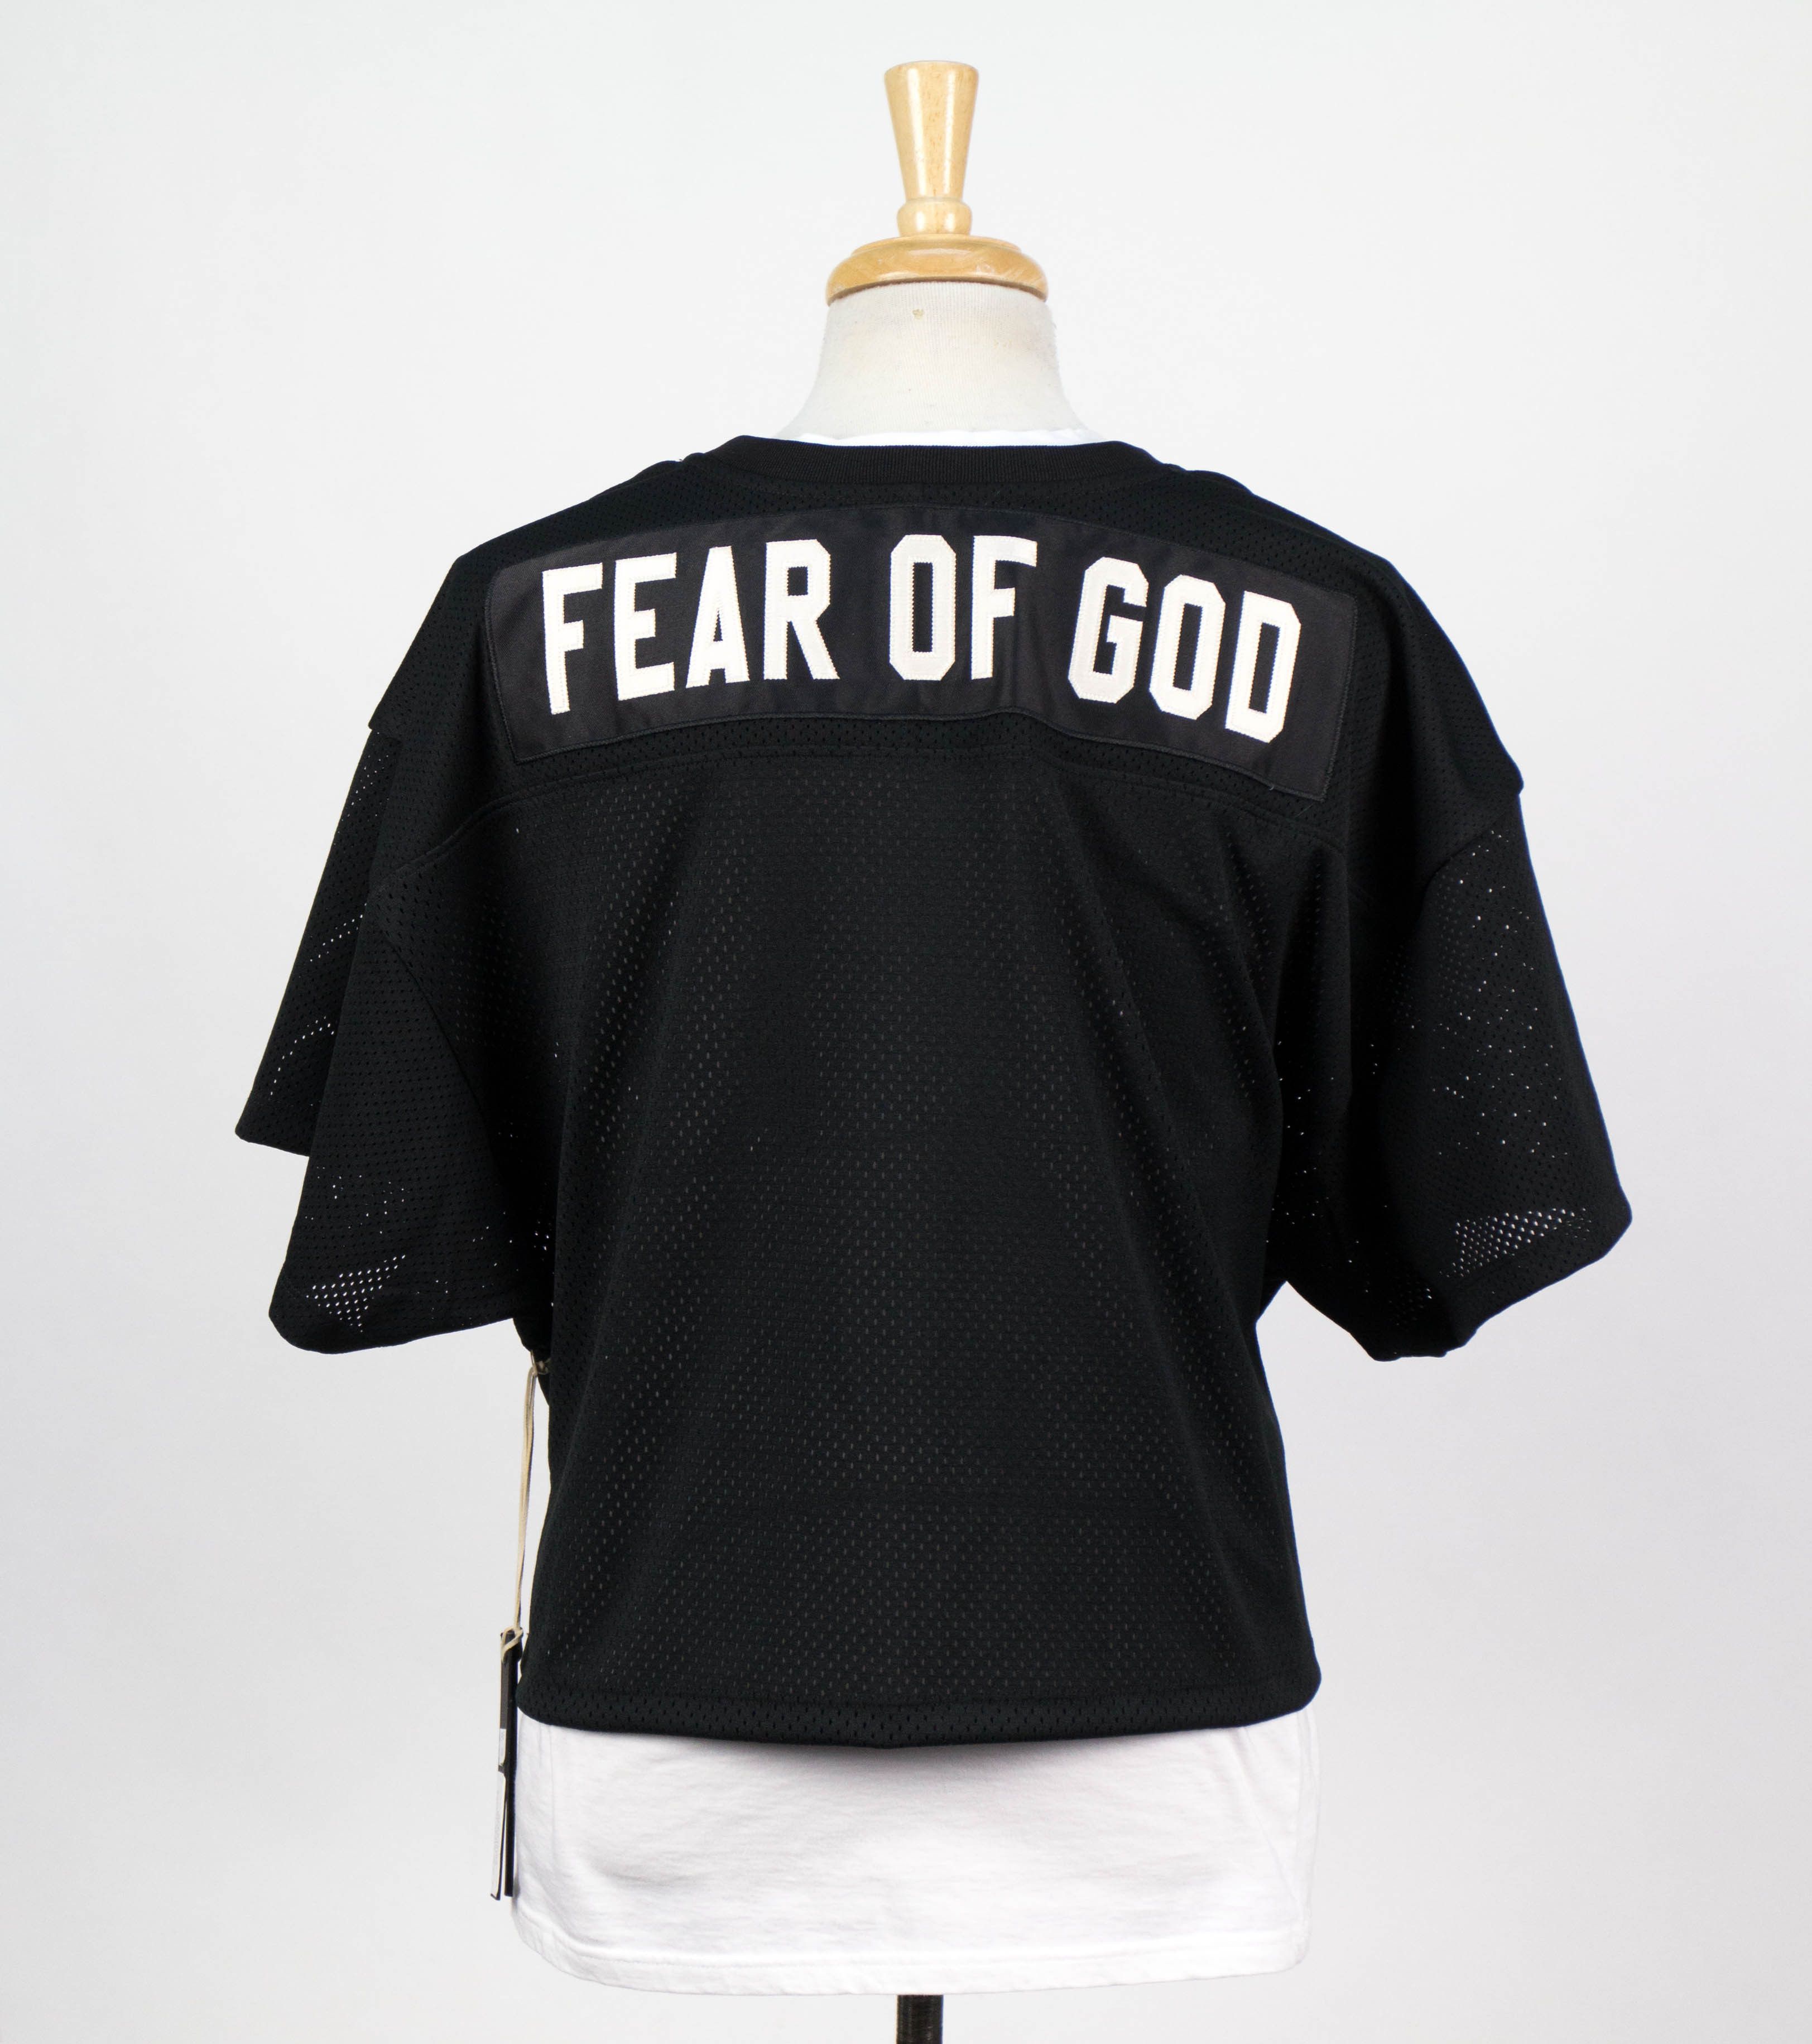 FEAR OF GOD 5TH MESH FOOTBALL JERSEY